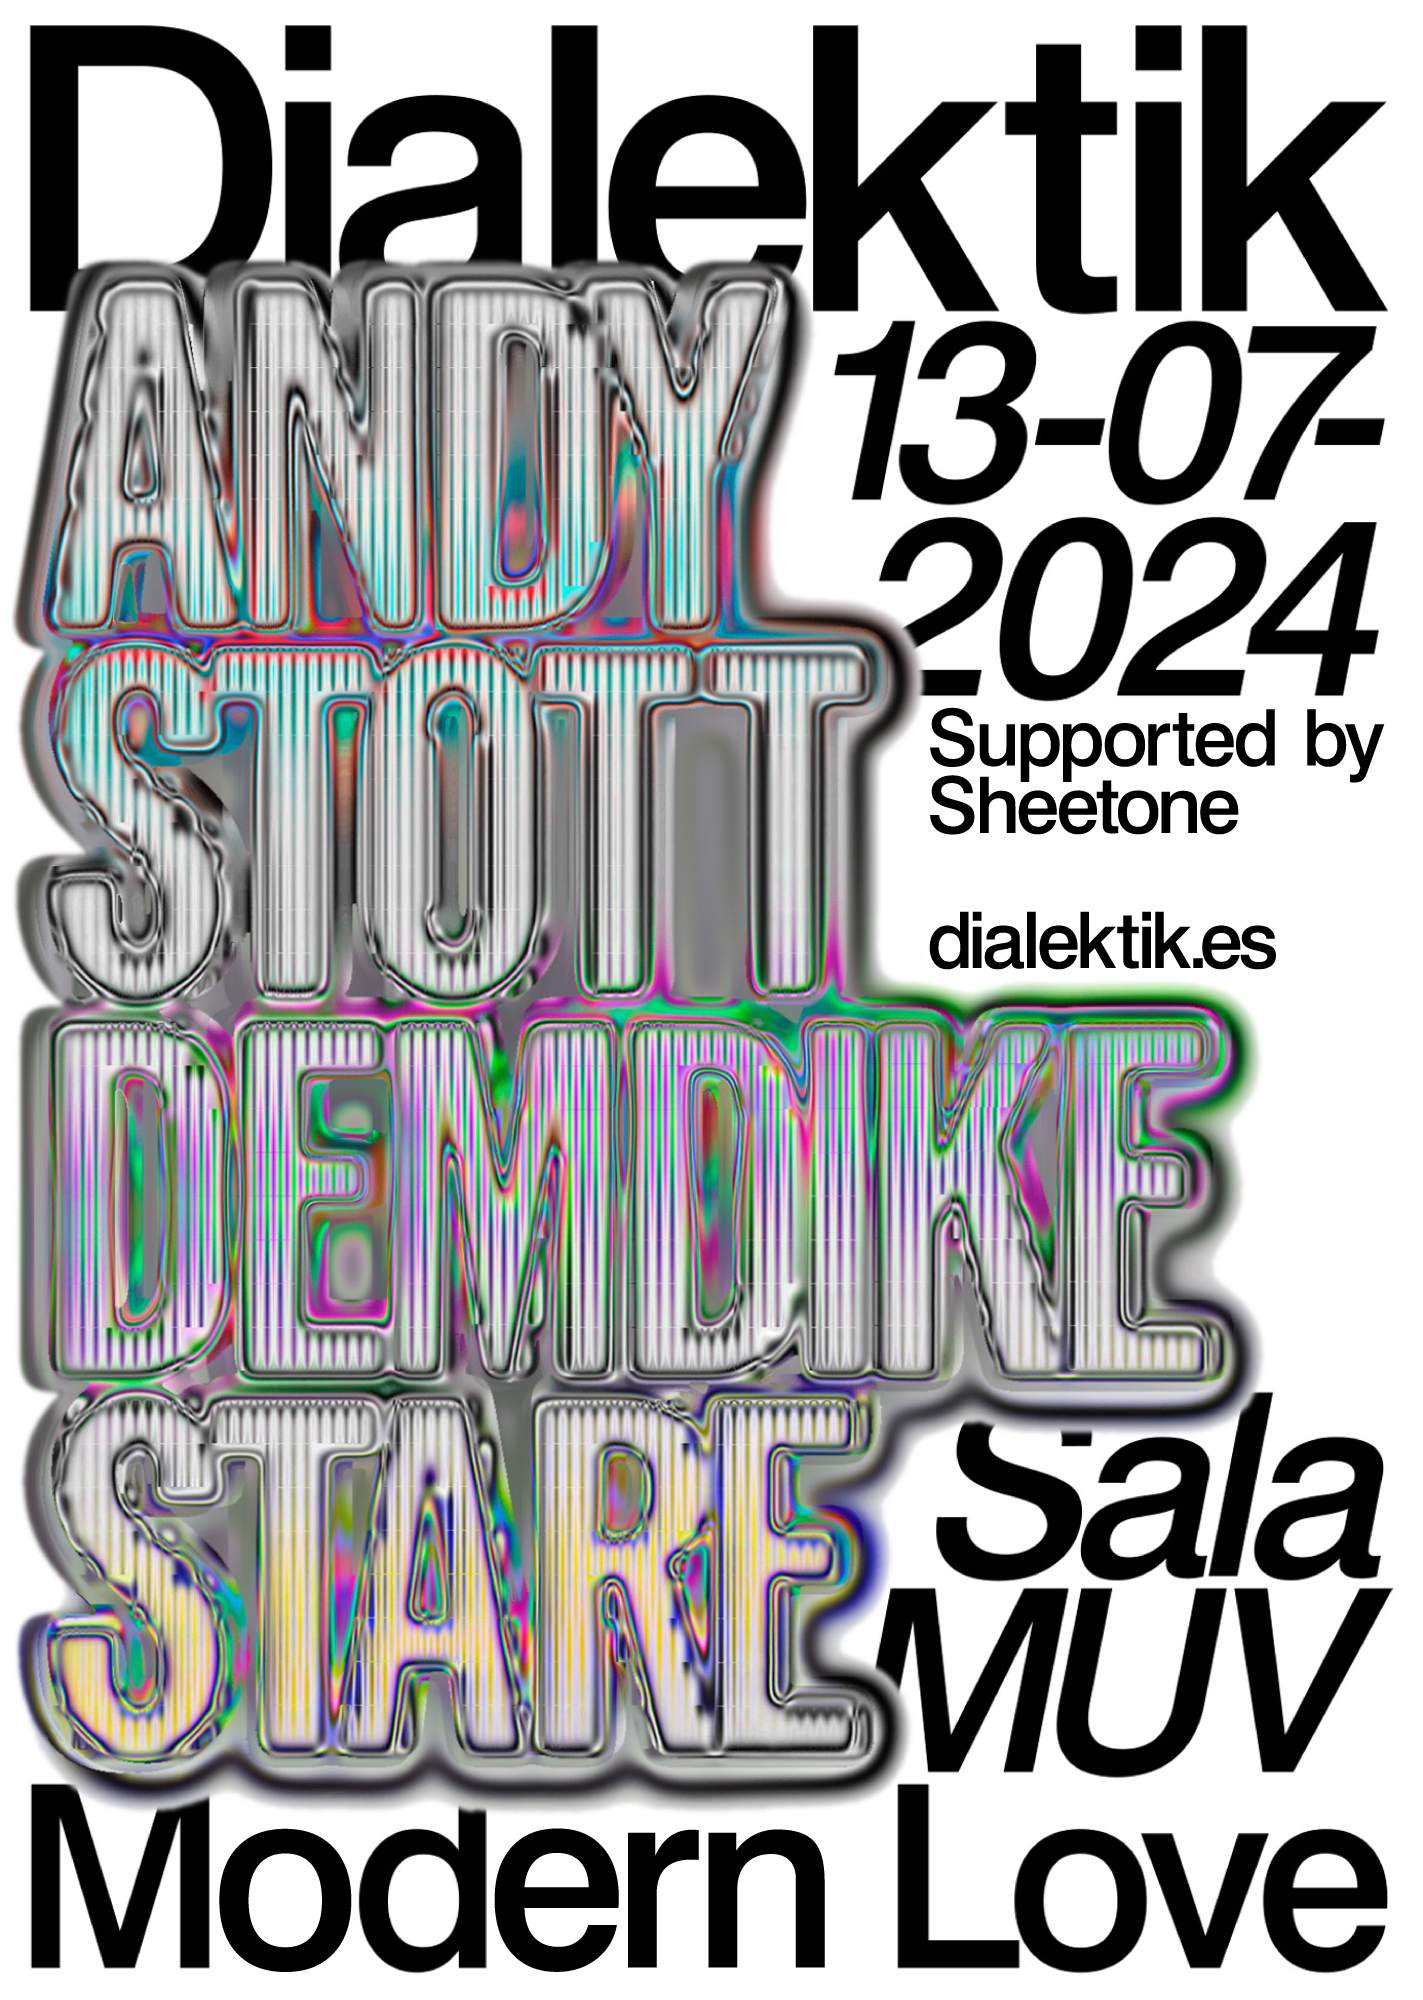 Dialektik: Andy Stott (live), Demdike Stare (extended set) - フライヤー表